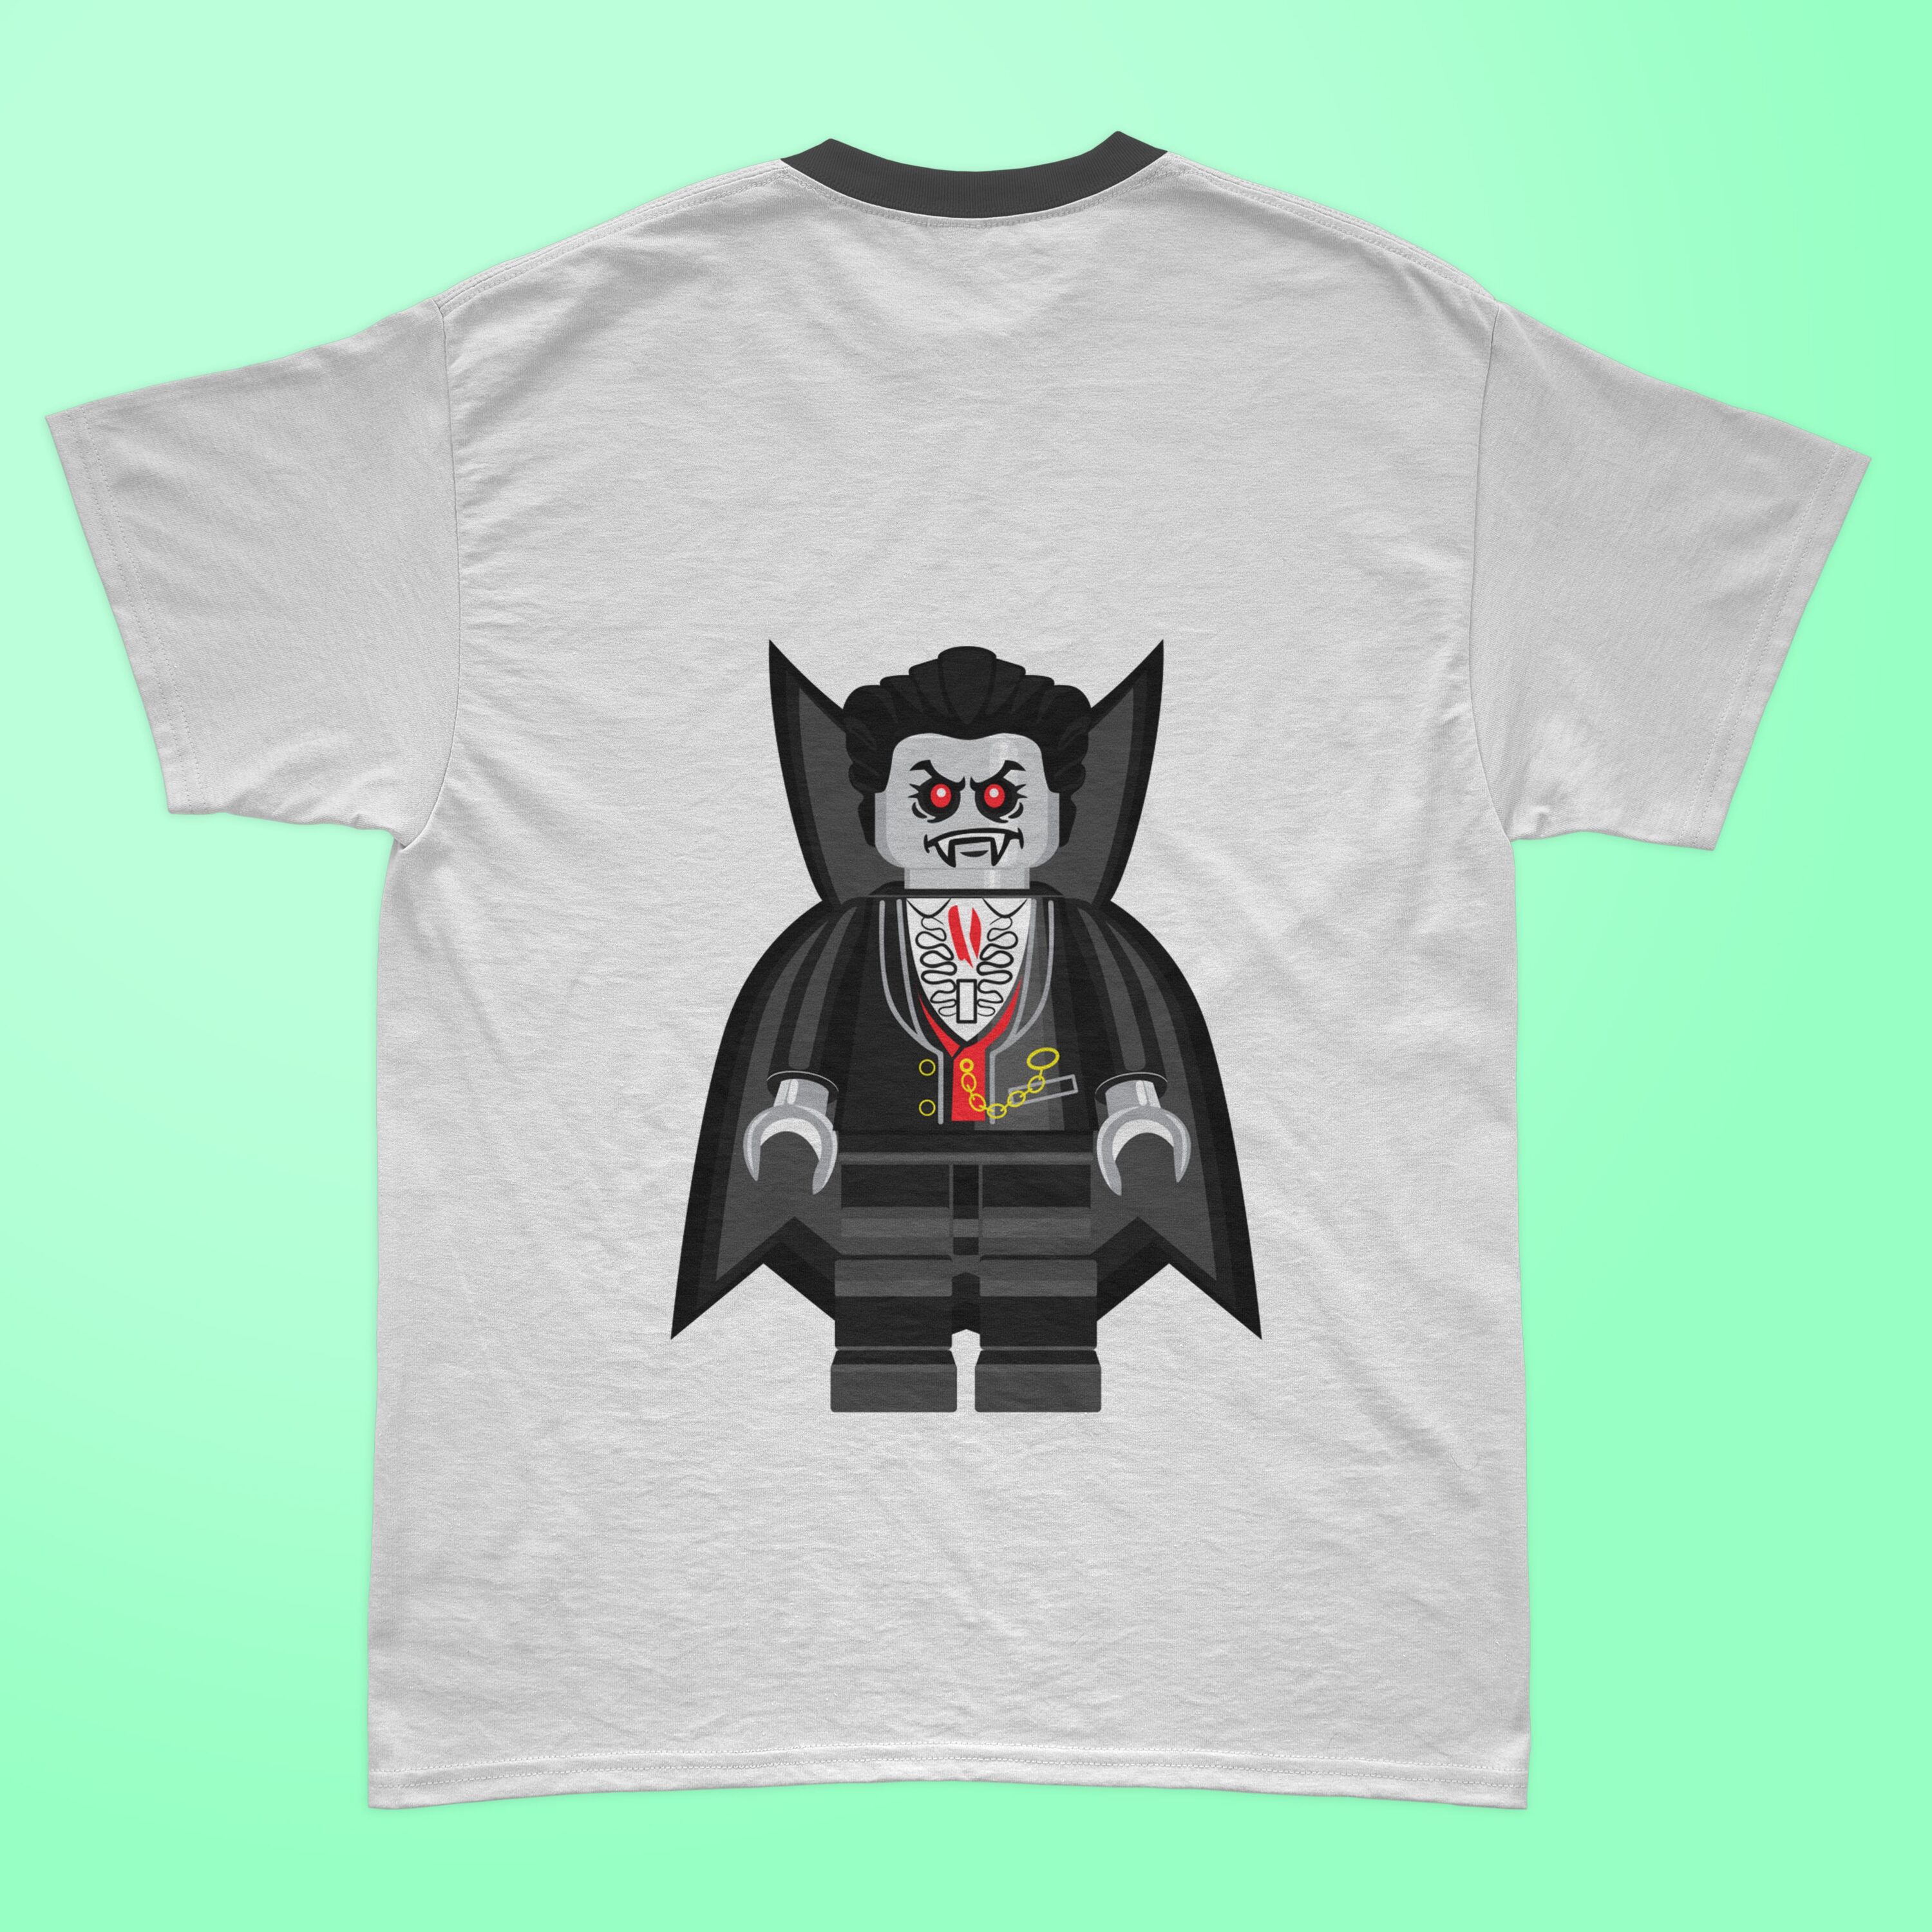 Lego Dracula man - t-shirt design.